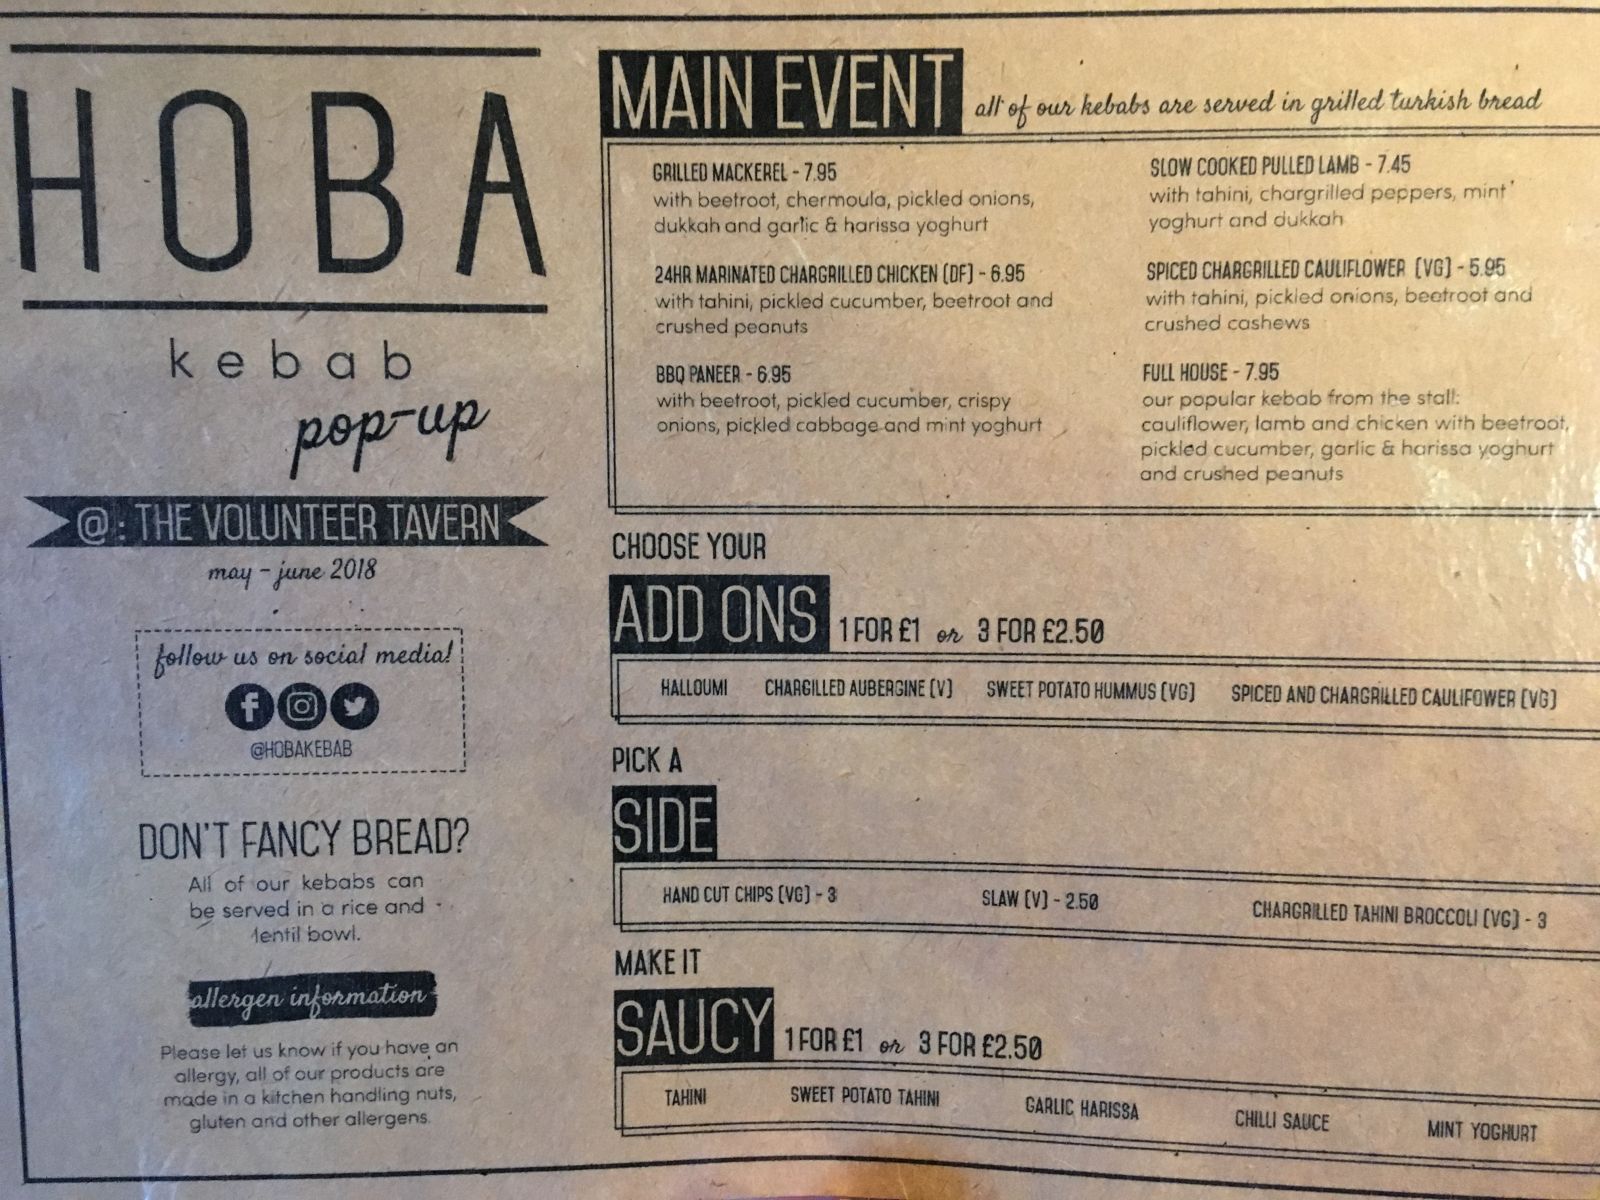 The menu at Hoba Kebab.